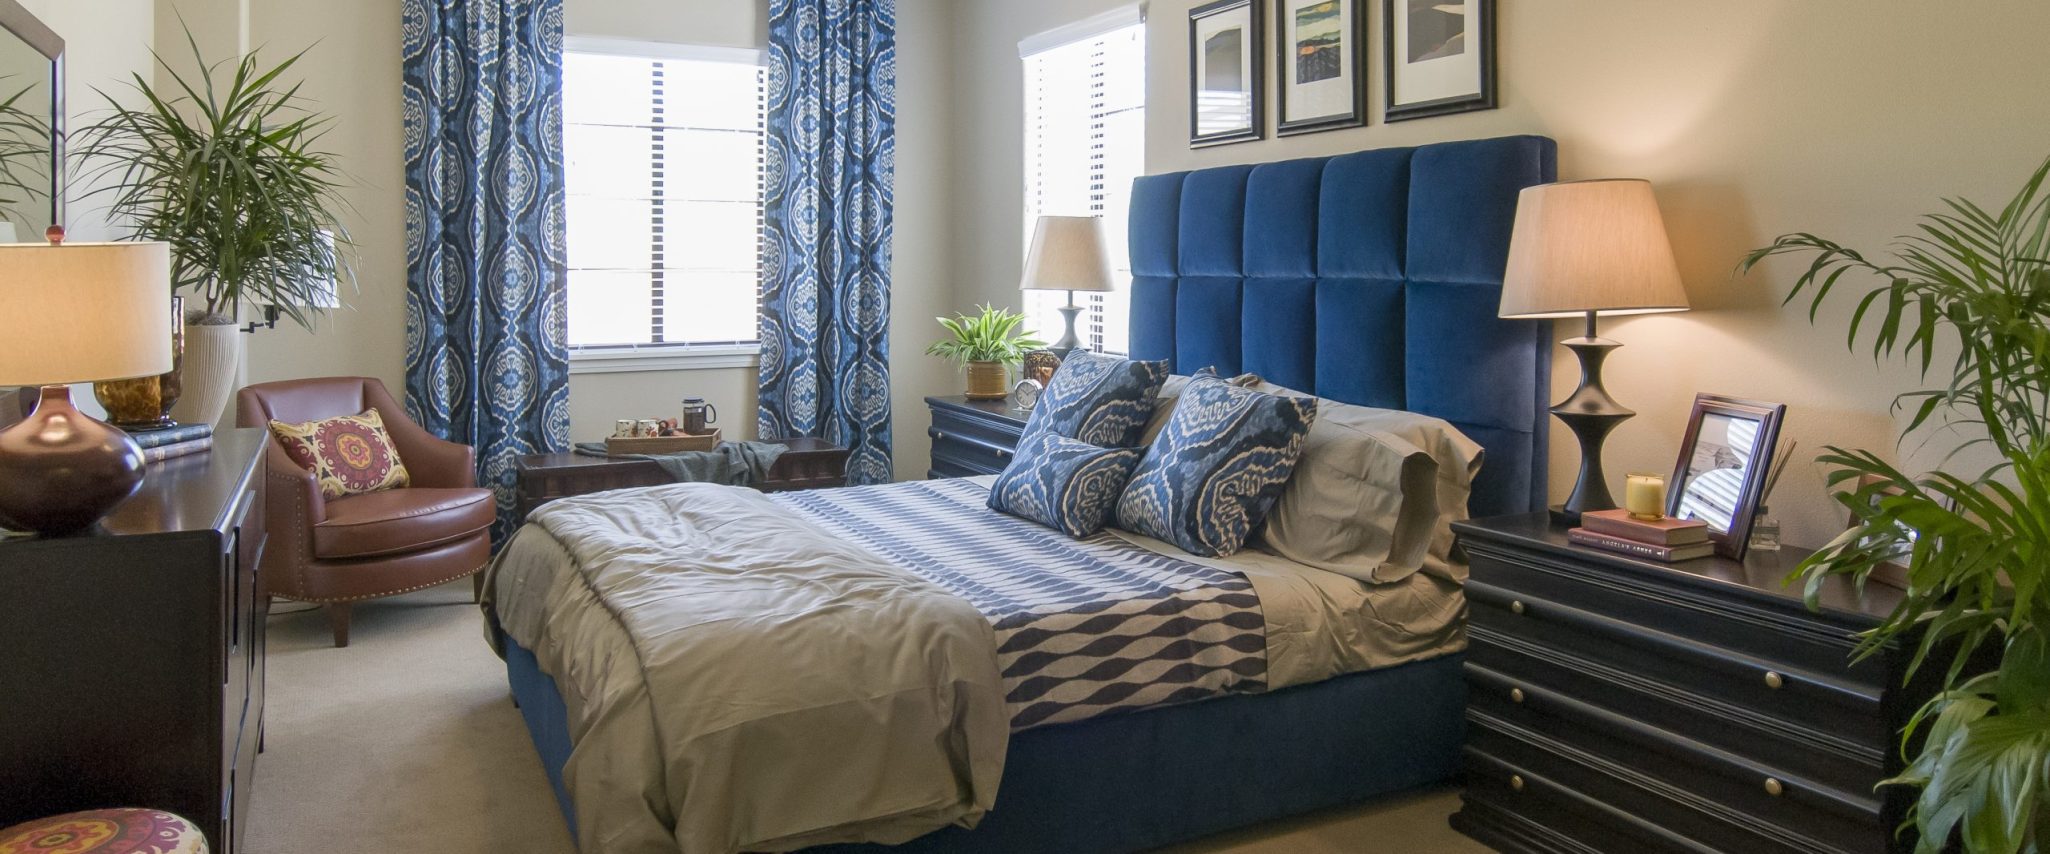 Luxury Senior Living Floor Plans The Heritage Tradition